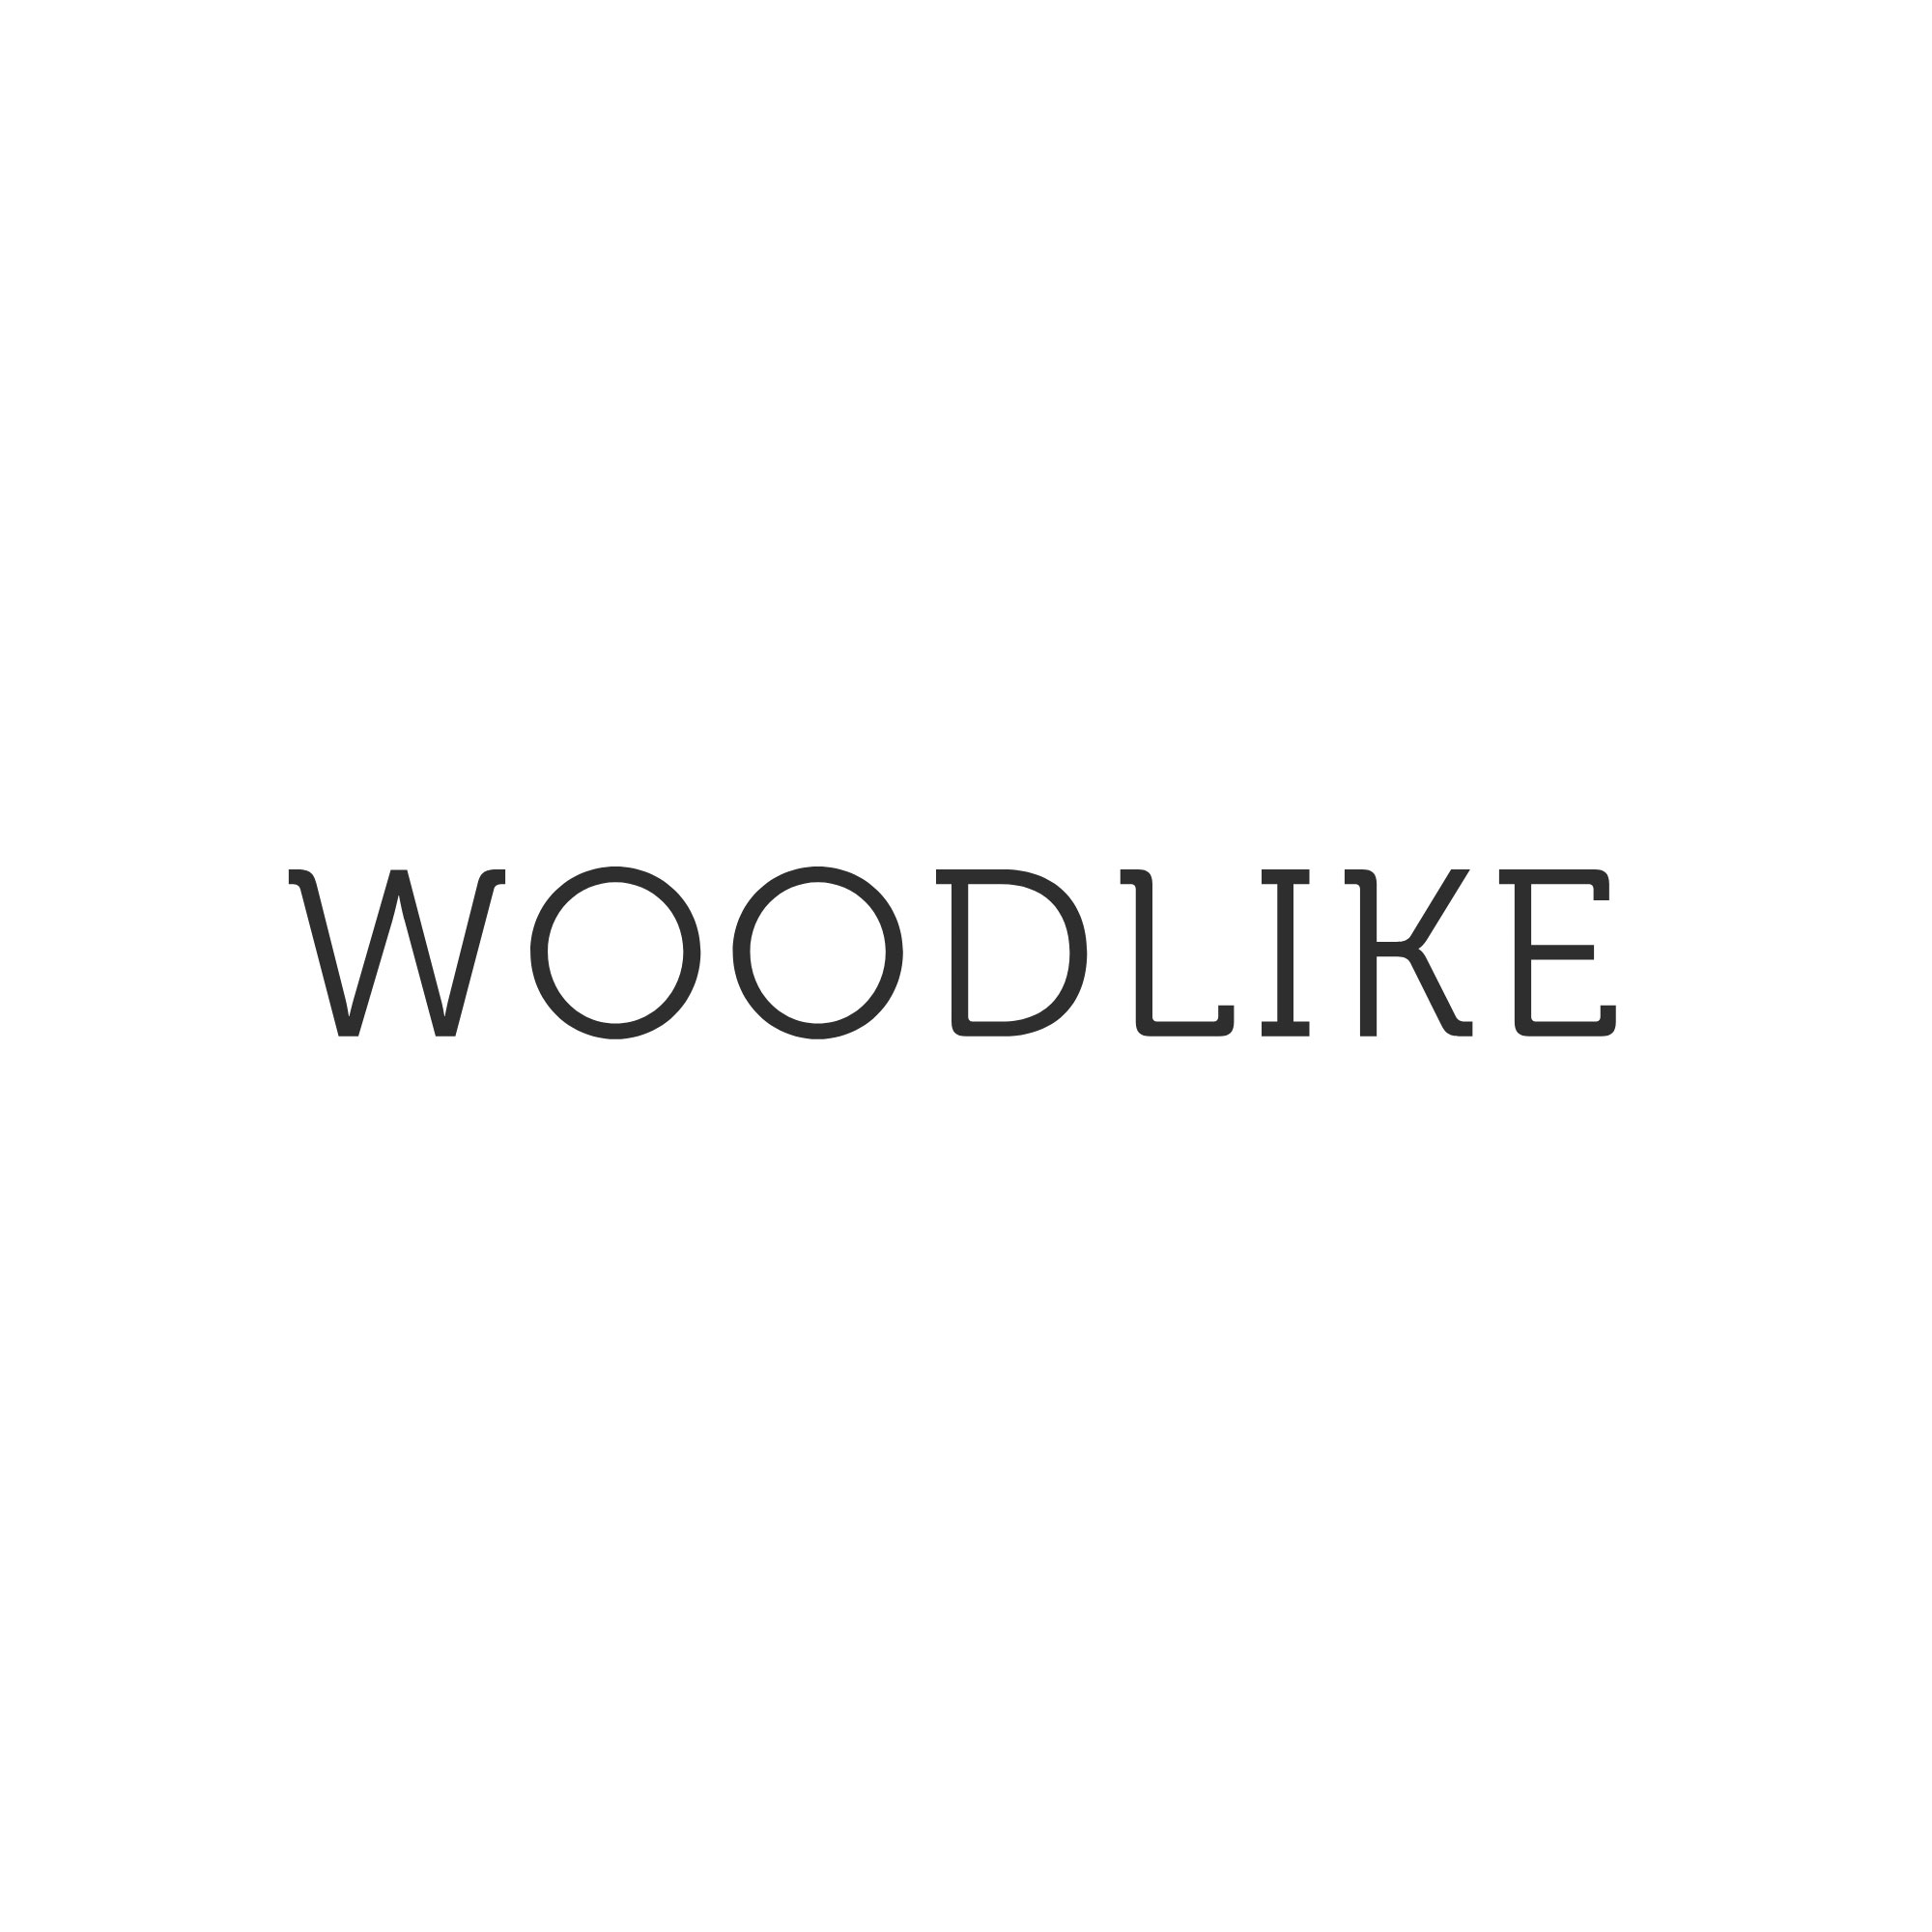 Woodlike Coupons & Promo Codes